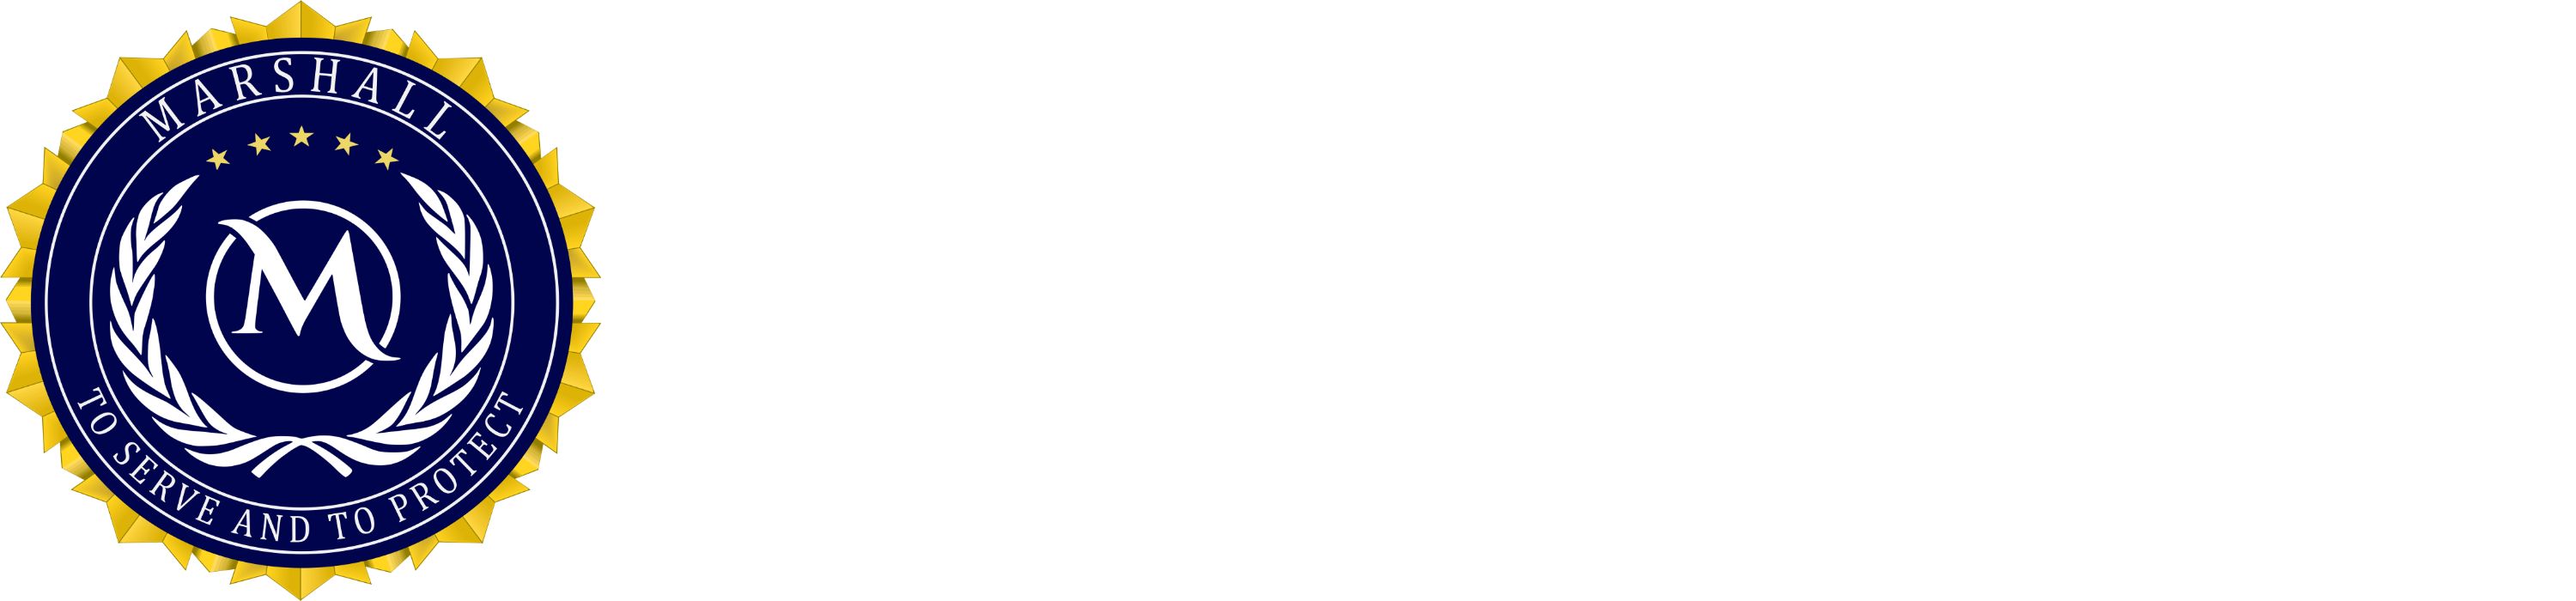 Marshall Group Sp. z o. o. - logo